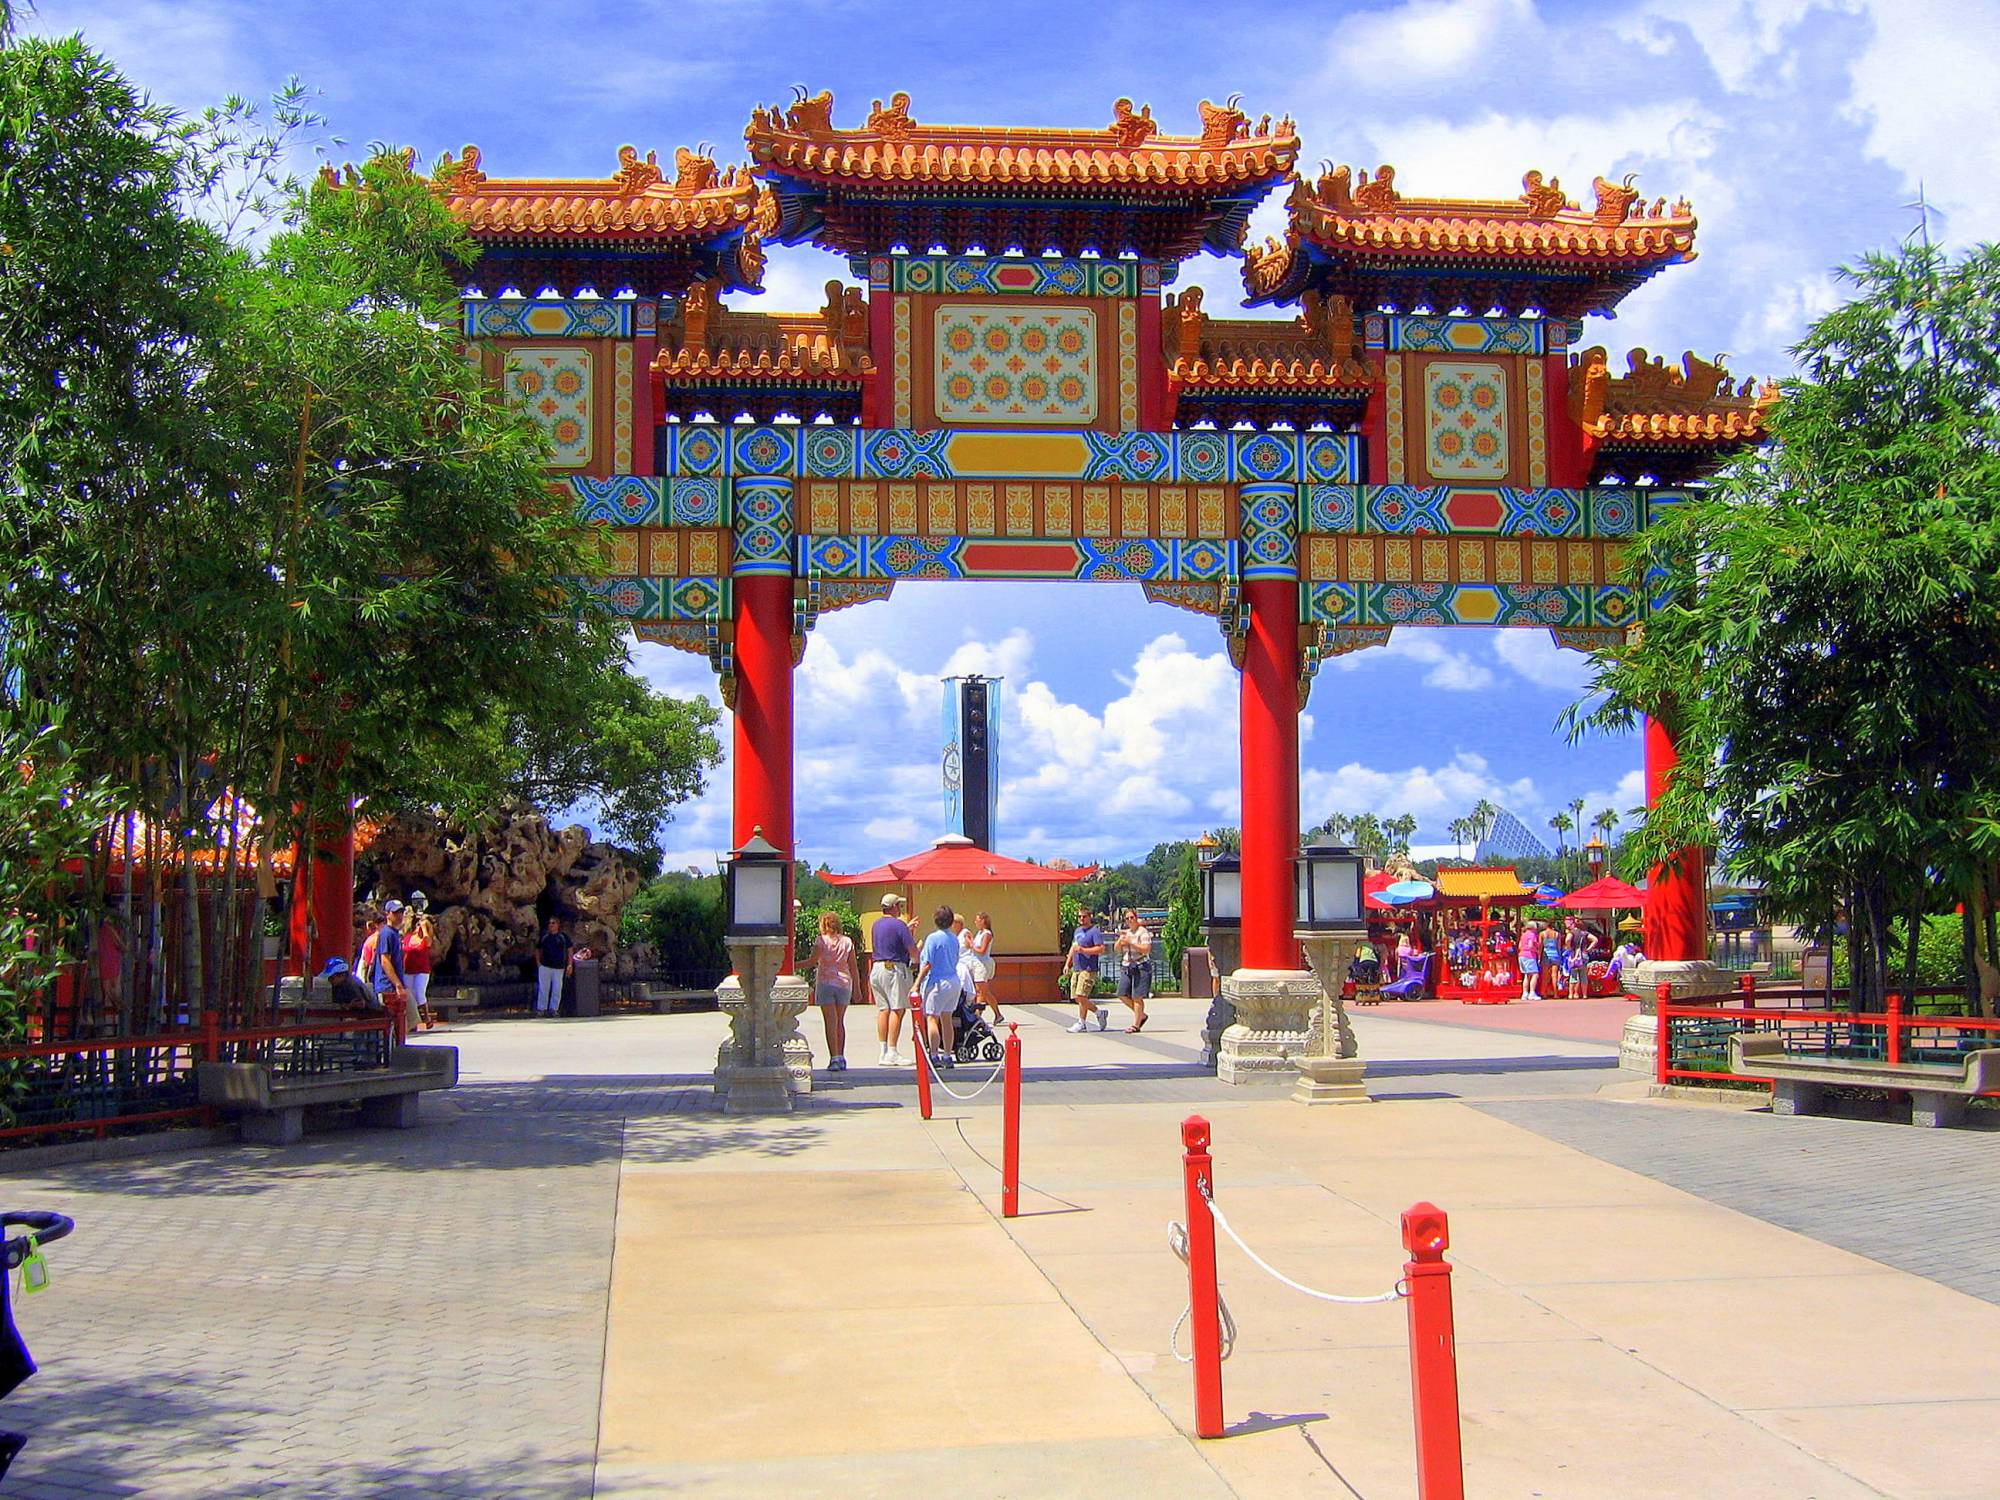 China Pavilion - Entrance Gate